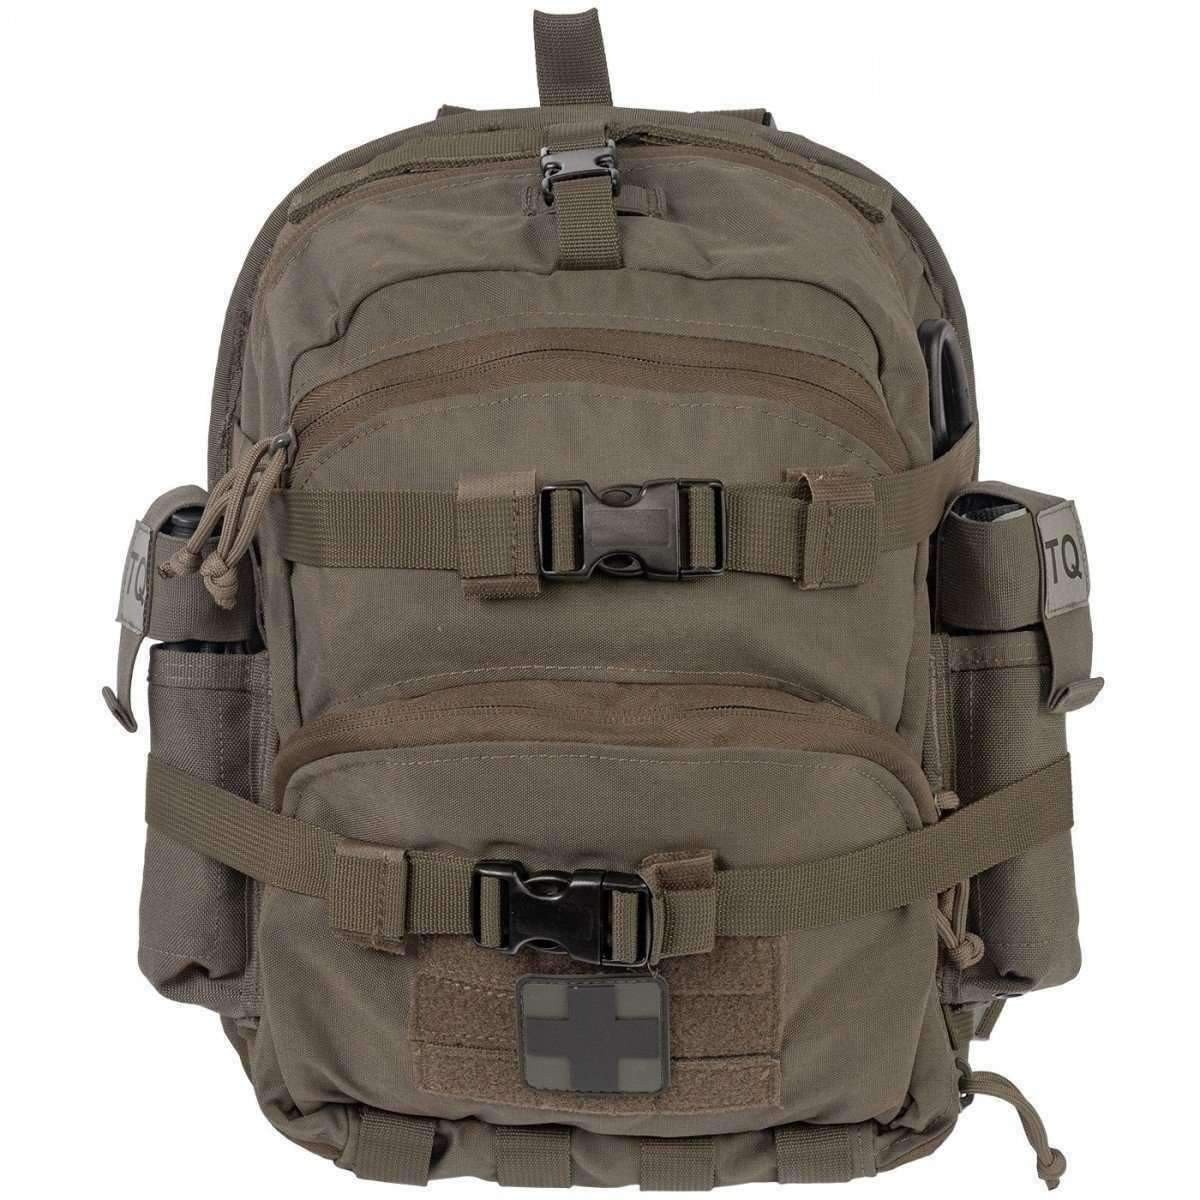 NAR Mini-Medic Bag Kit - MED-TAC International Corp. - North American Rescue